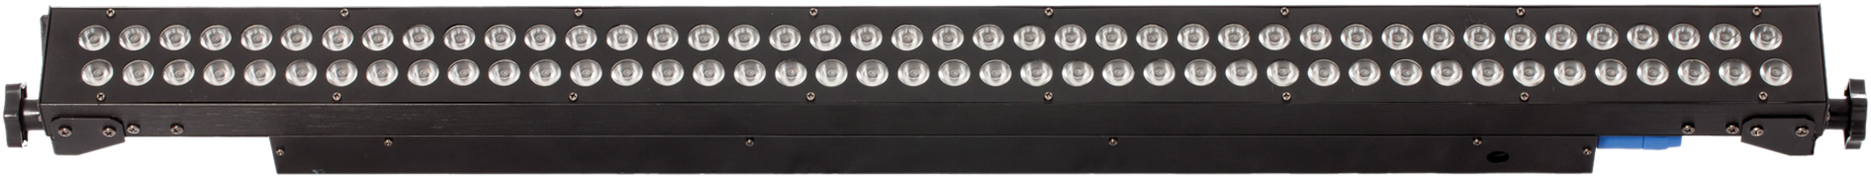 LED Strip HO - (1007 x 70 x 113mm)